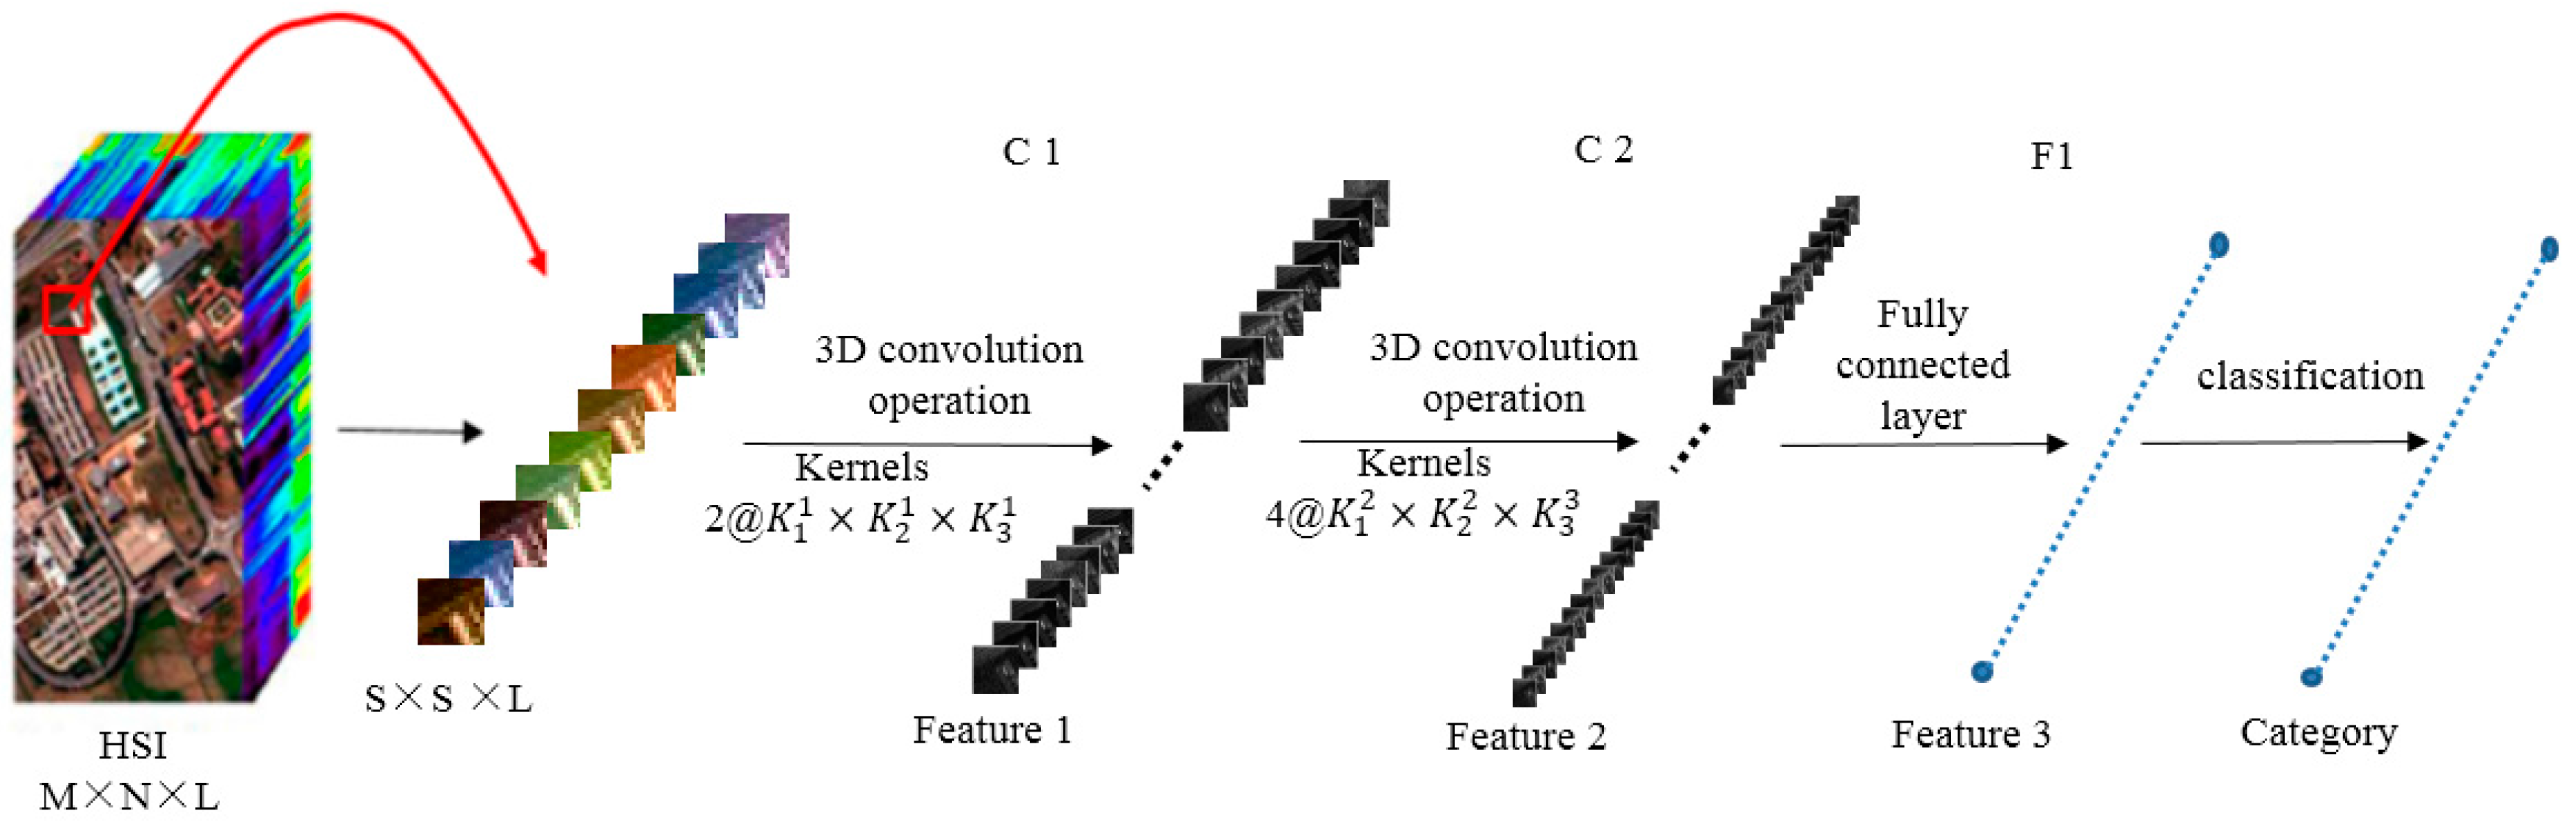 cnn image binary classification simple example